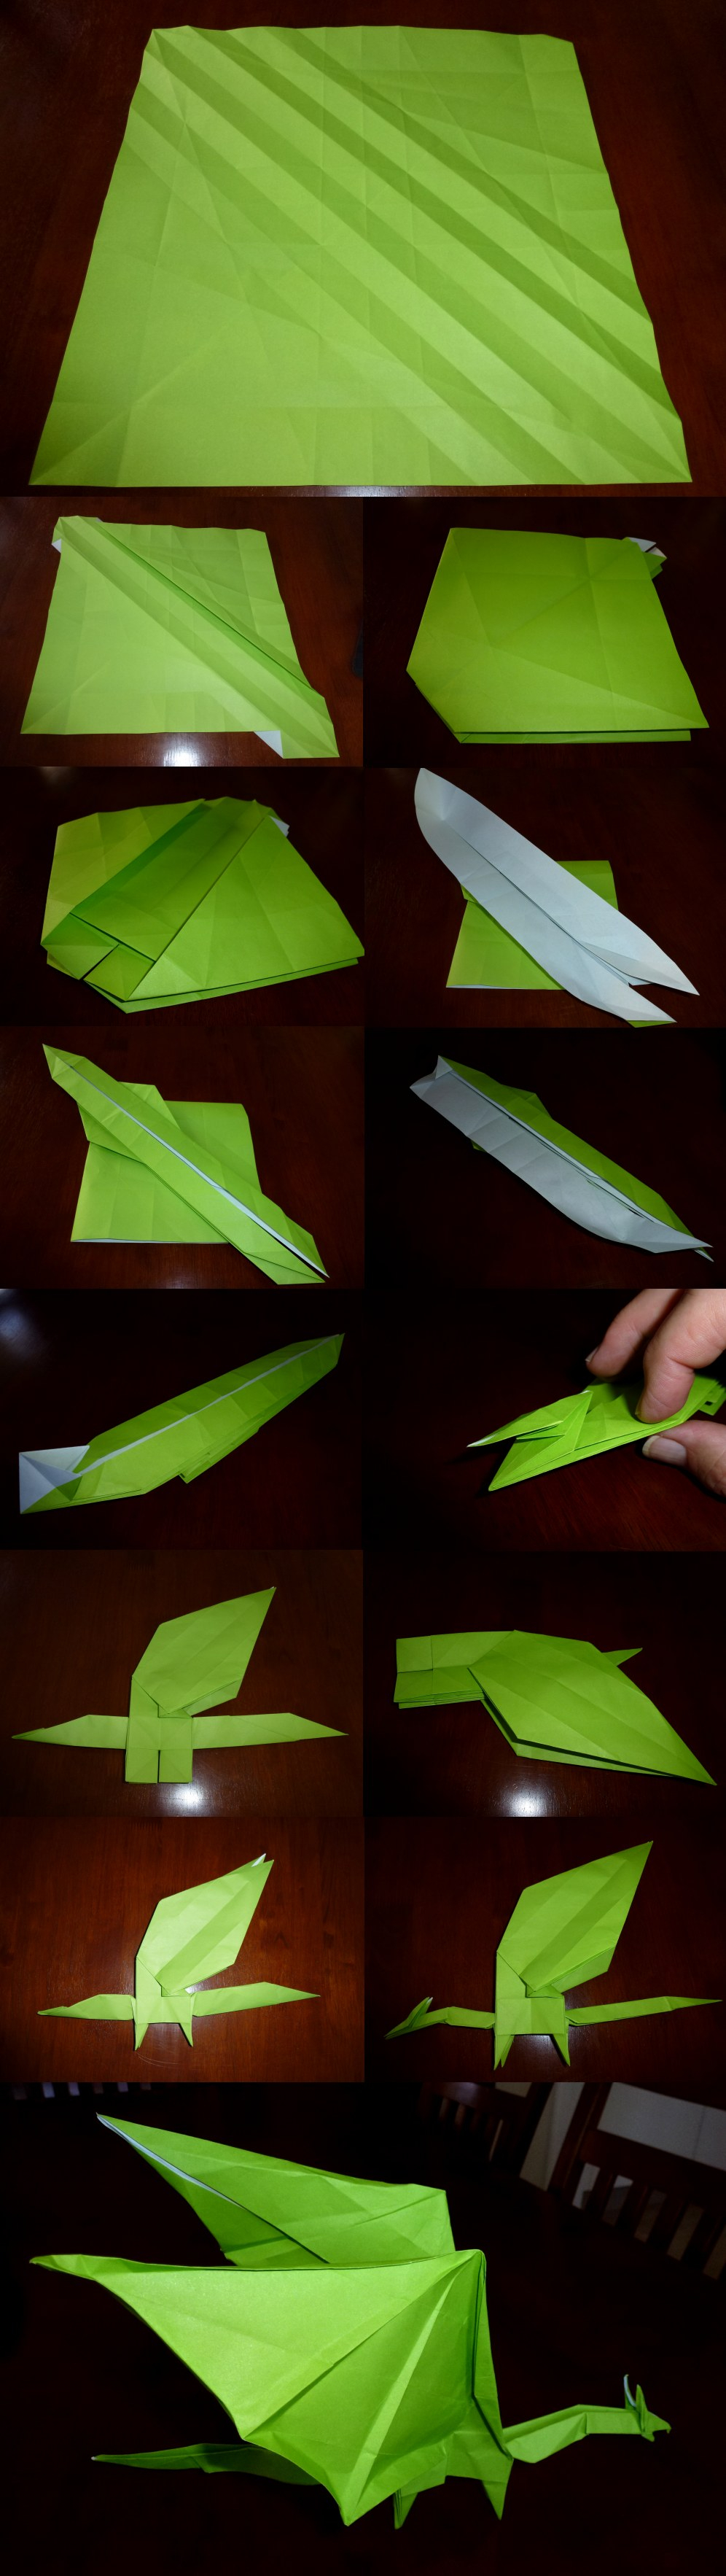 Origami Simple Dragon Shuki Kato 554 4365 Shuki Katos Simple Dragon Setting The Crease